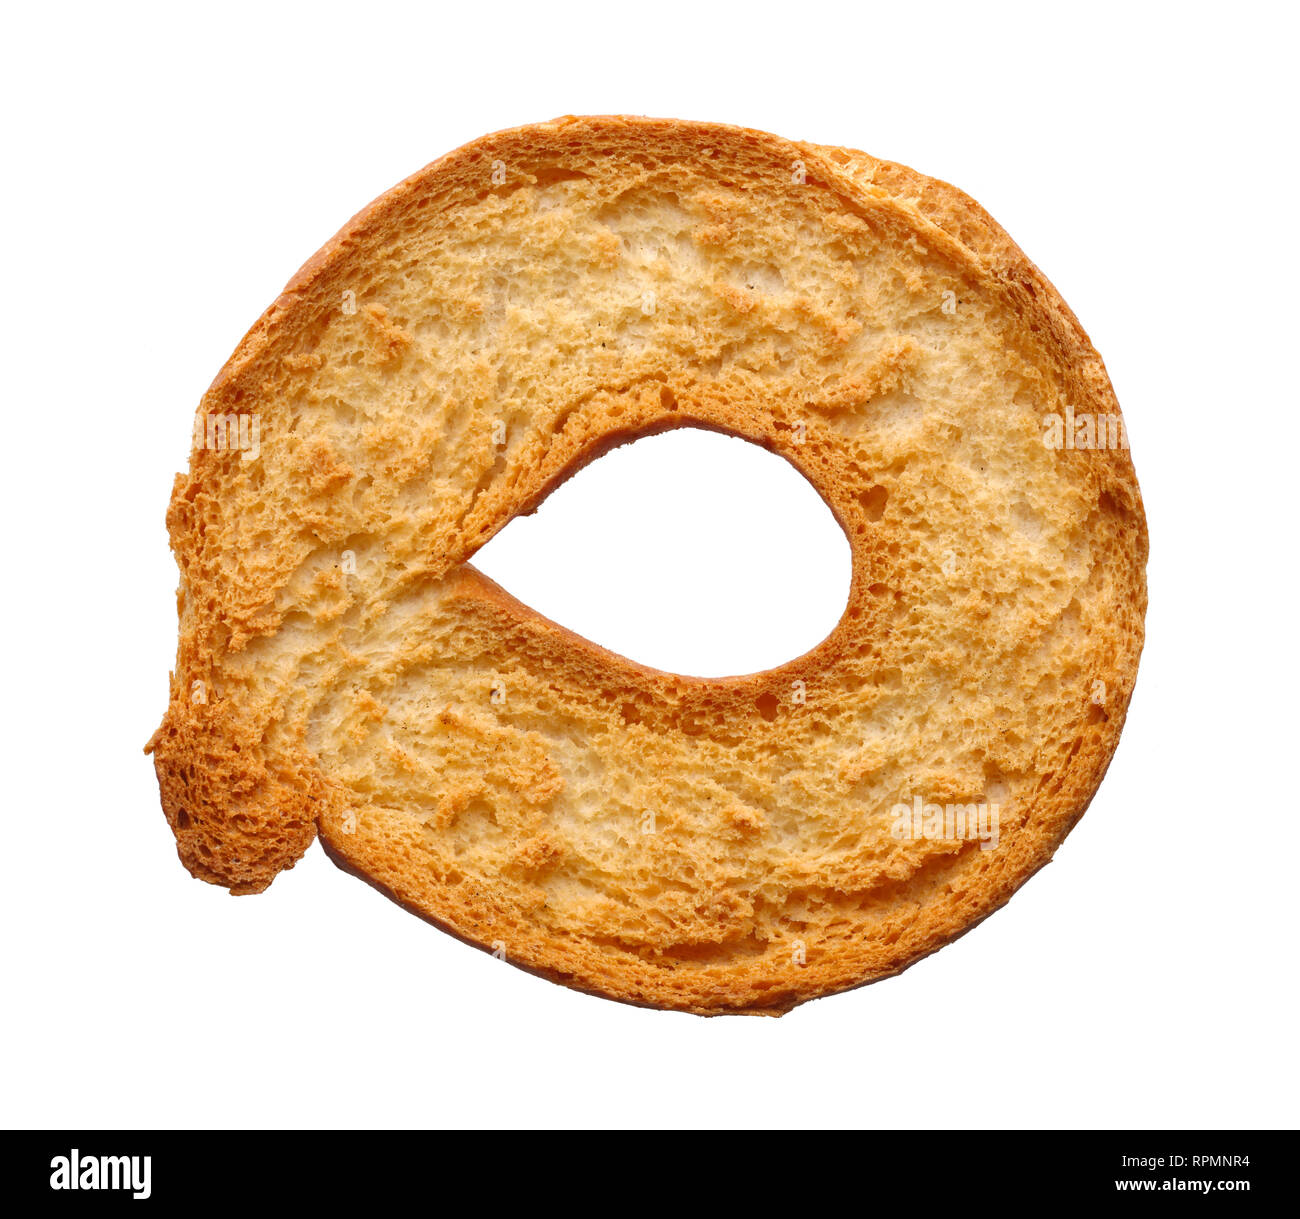 Cibo e bevande: singolo bagel arrosto, isolato su sfondo bianco Foto Stock